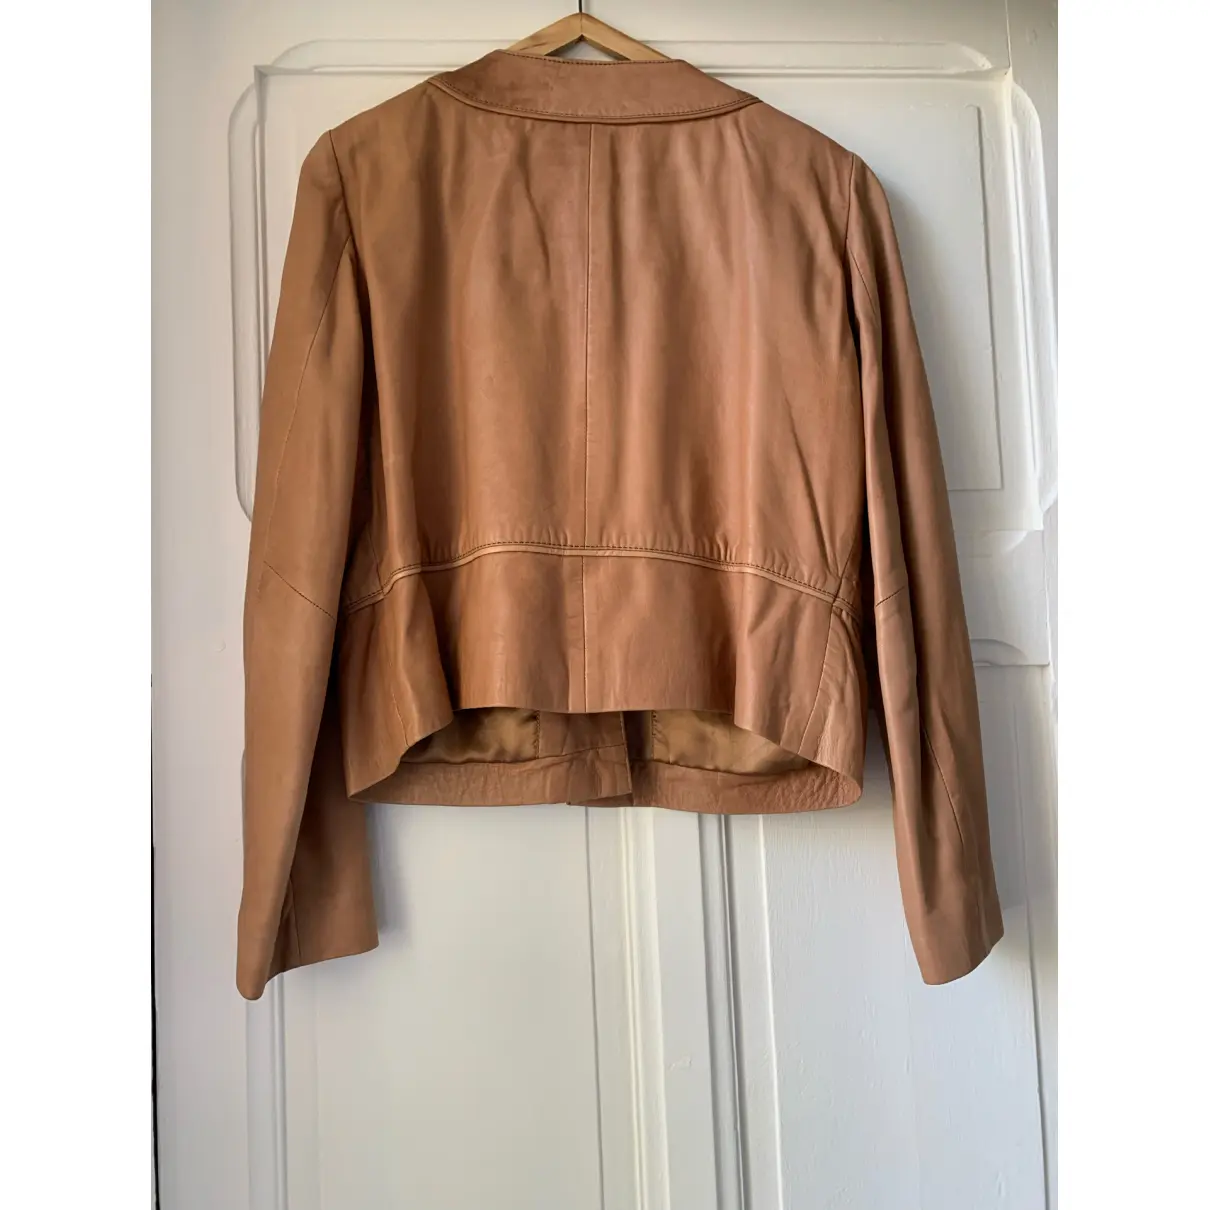 Buy CAROLL Leather jacket online